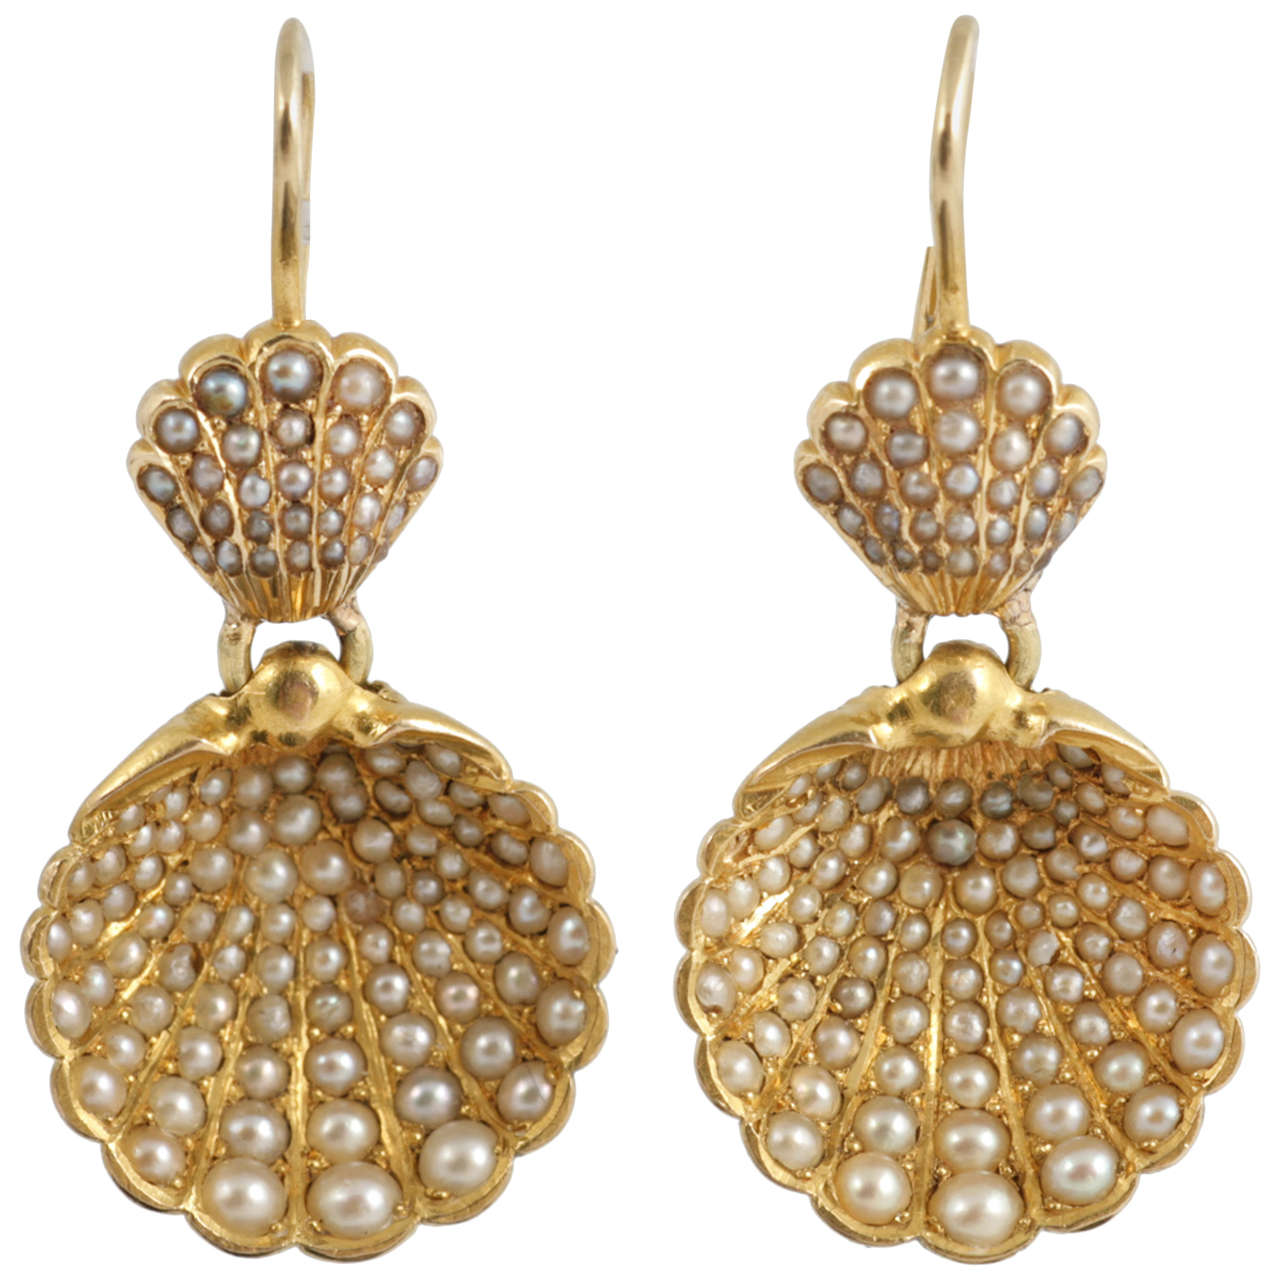 Pearl Shell earrings. For Sale